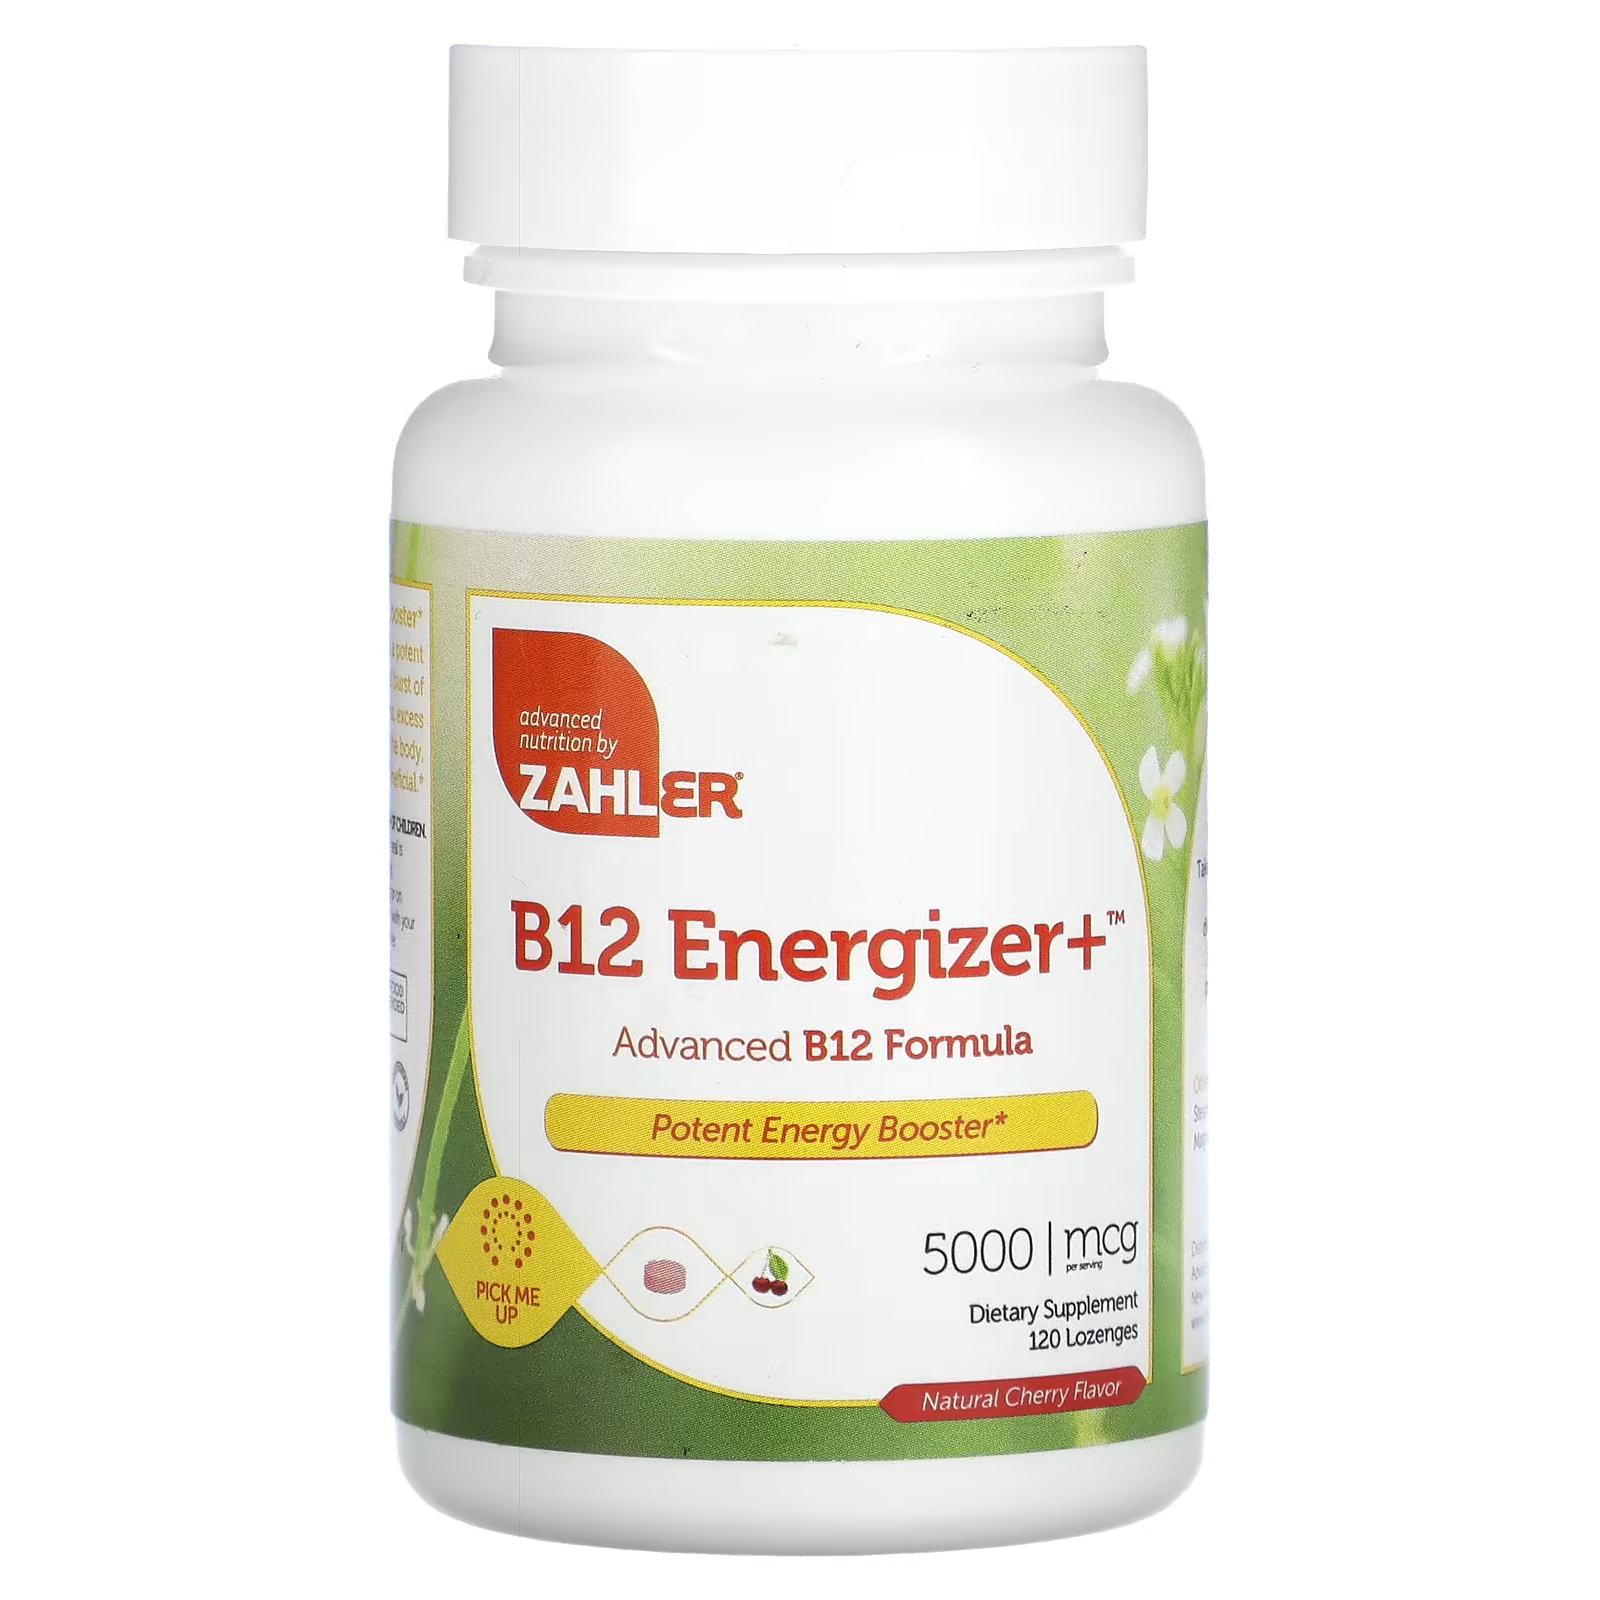 Биологически активная добавка Zahler B12 Energizer+ усовершенствованная формула B12, натуральная вишня, 5000 мкг., 120 таблеток sundown naturals dissovable b12 вишня 5000 мкг 90 микролозиц